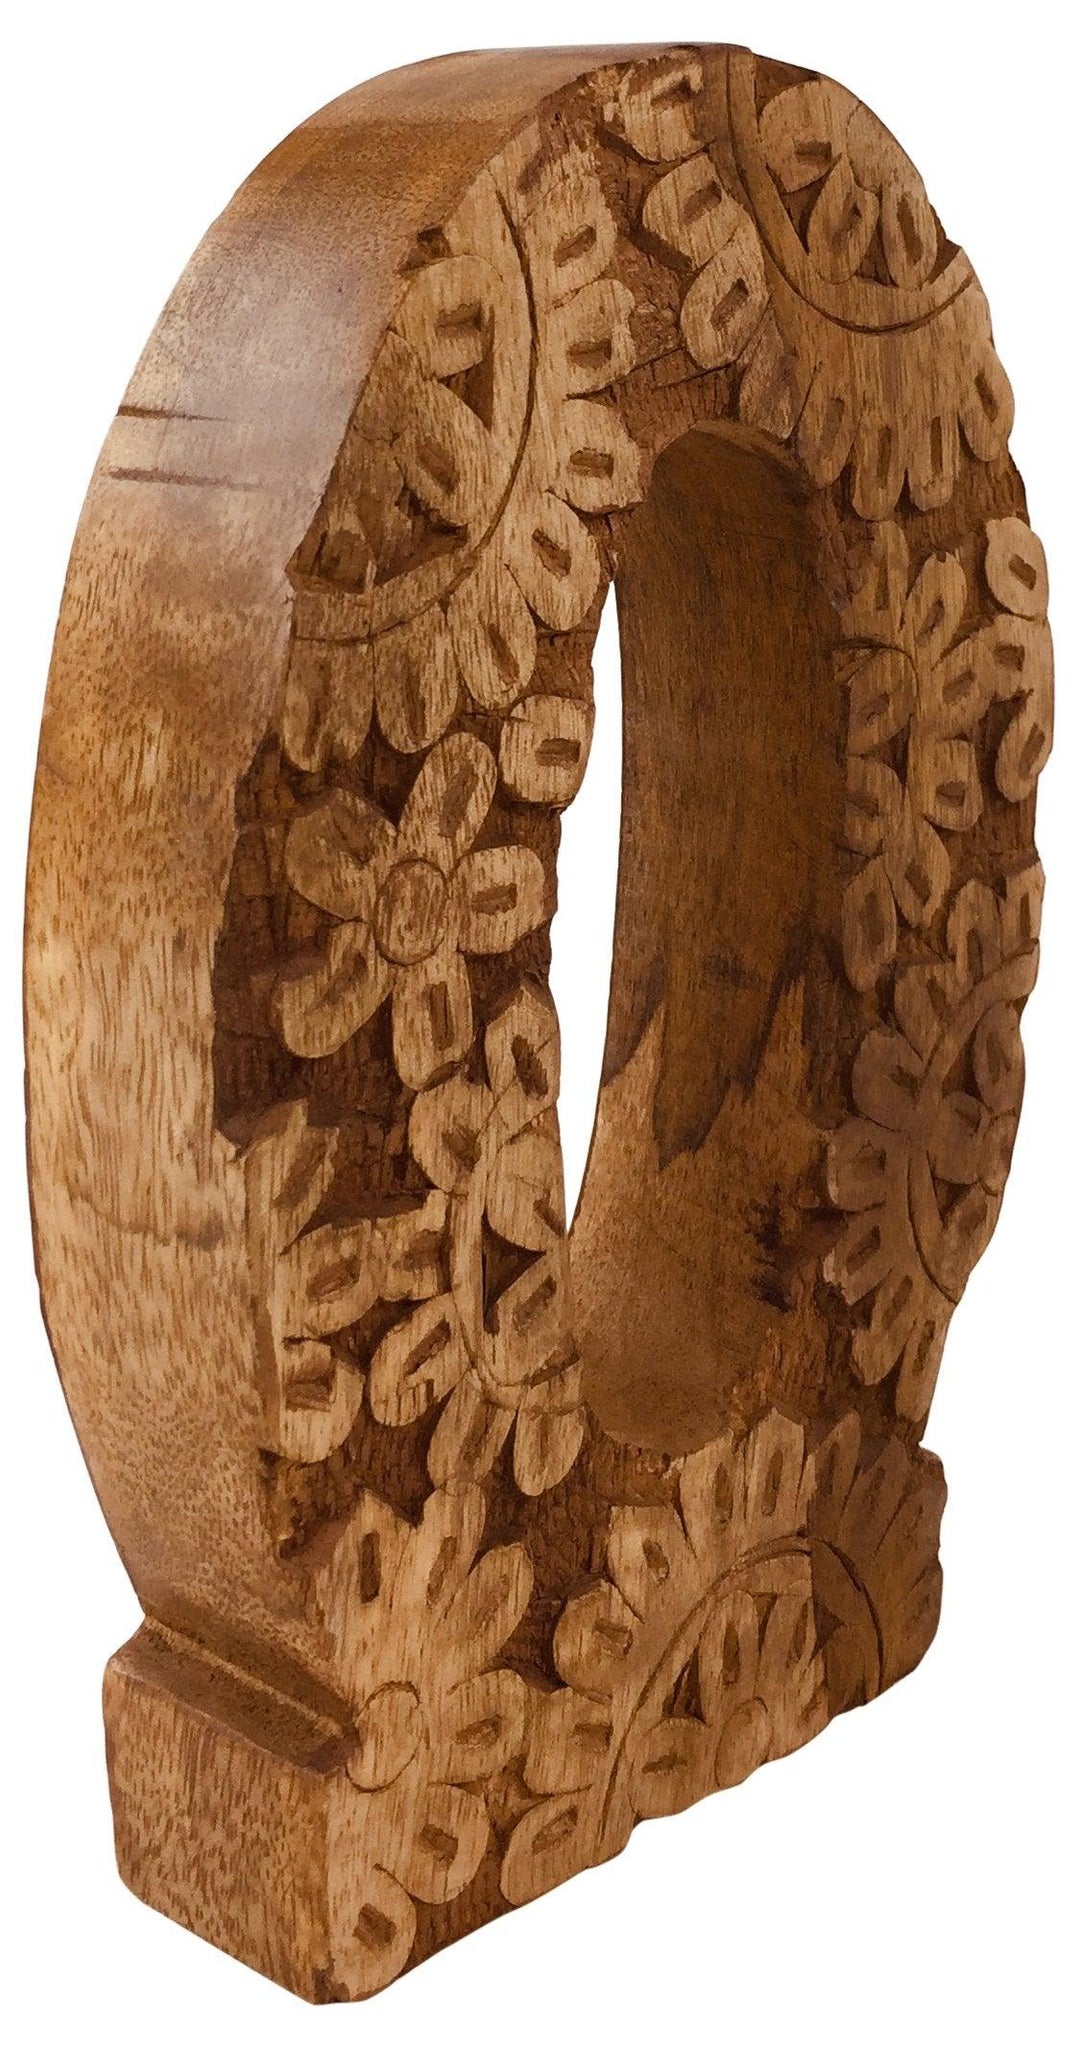 Hand Carved Wooden Flower Letter O - £12.99 - Single Letters 